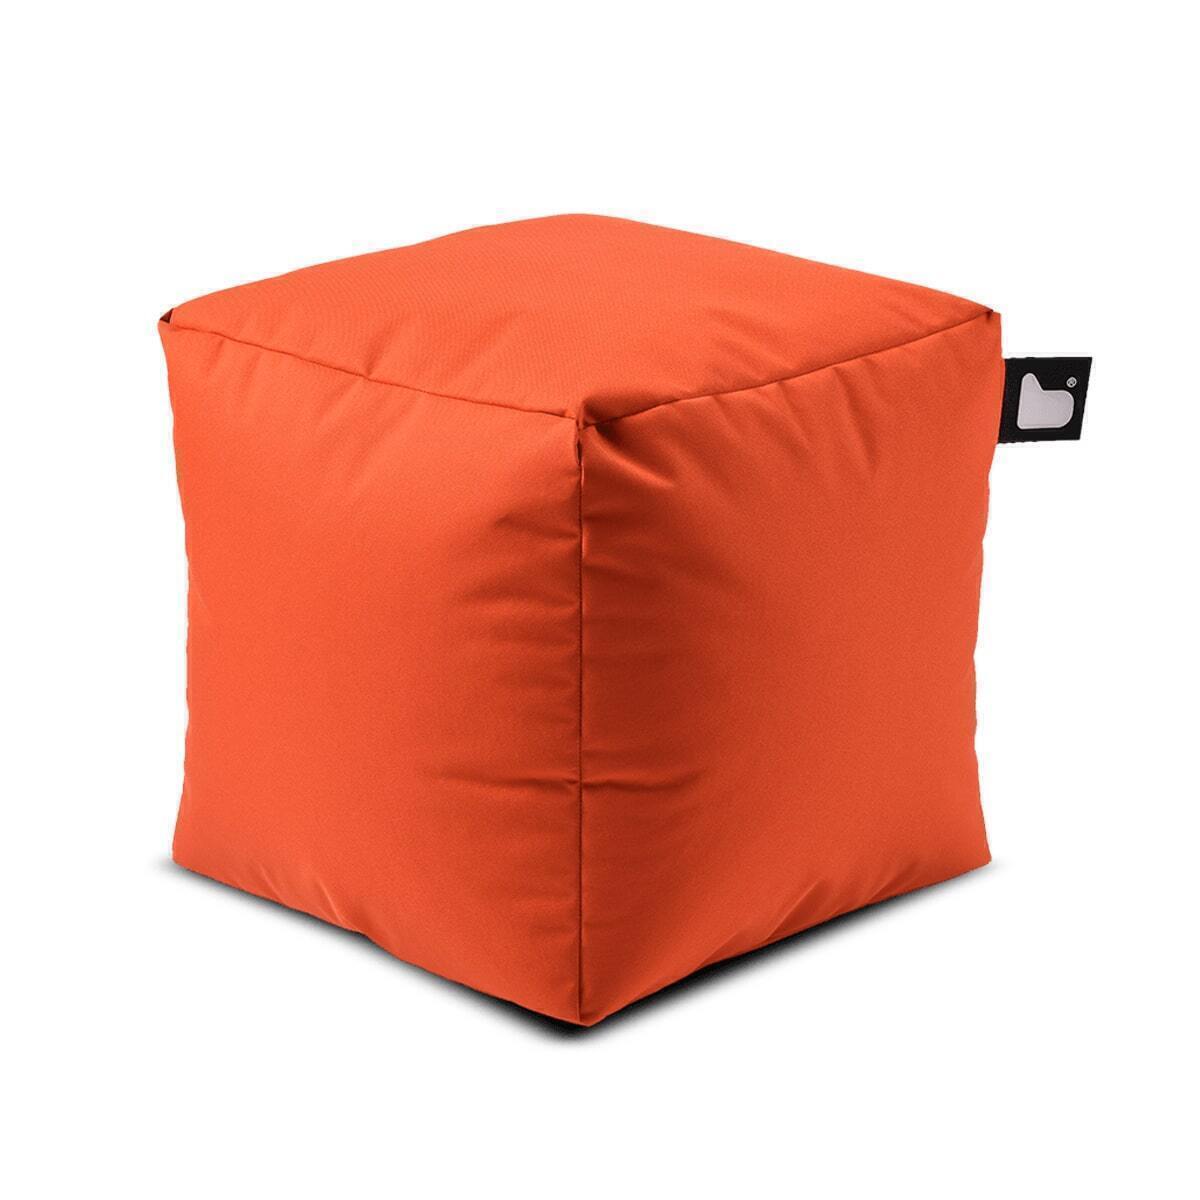 Extreme Lounging - Outdoor Bean Box  - Orange product image